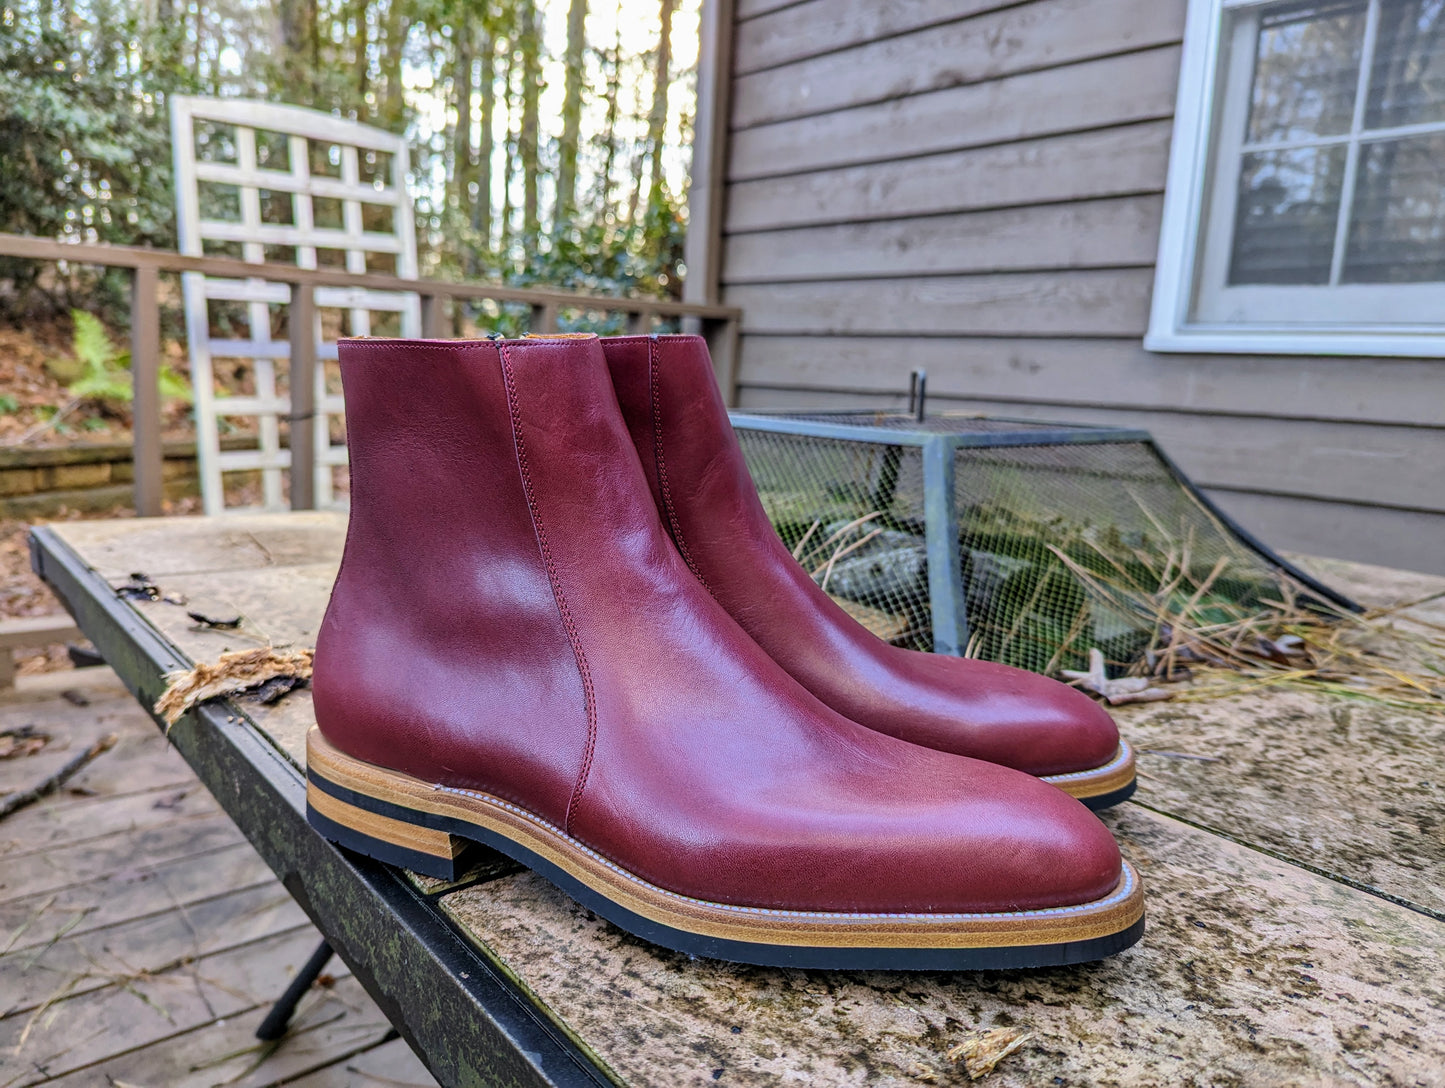 Bliskavka Zip Up Boot Red Calf, Size 11.5